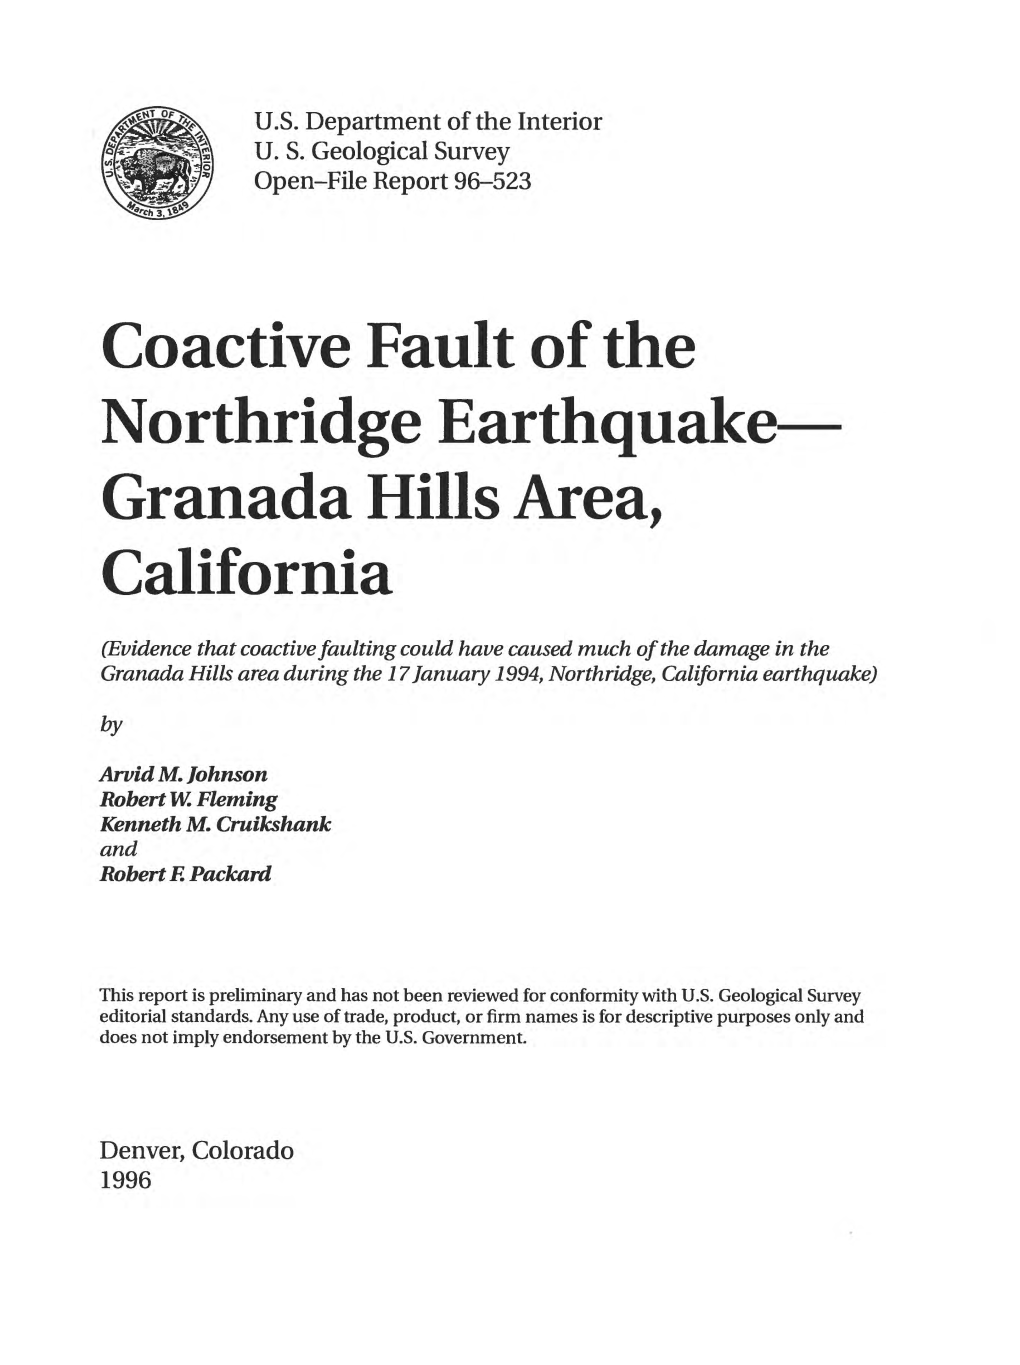 Coactive Fault of the Northridge Earthquake Granada Hills Area, California